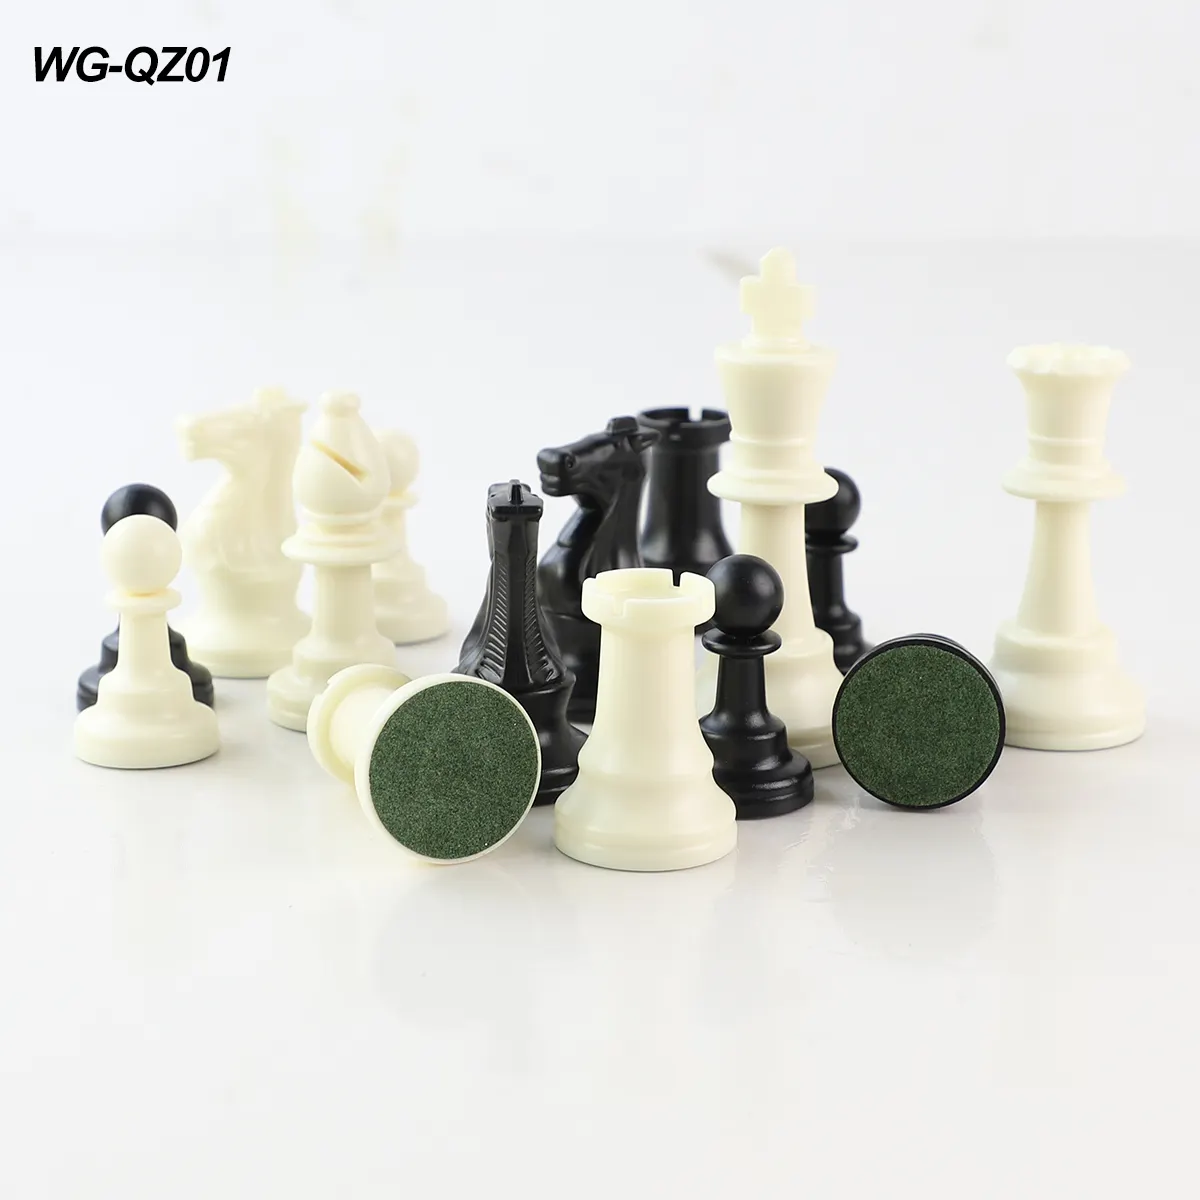 Шахматная доска Tournament 50 см, черно-белая, 9,75 см, 21 дюйм, шахматный набор